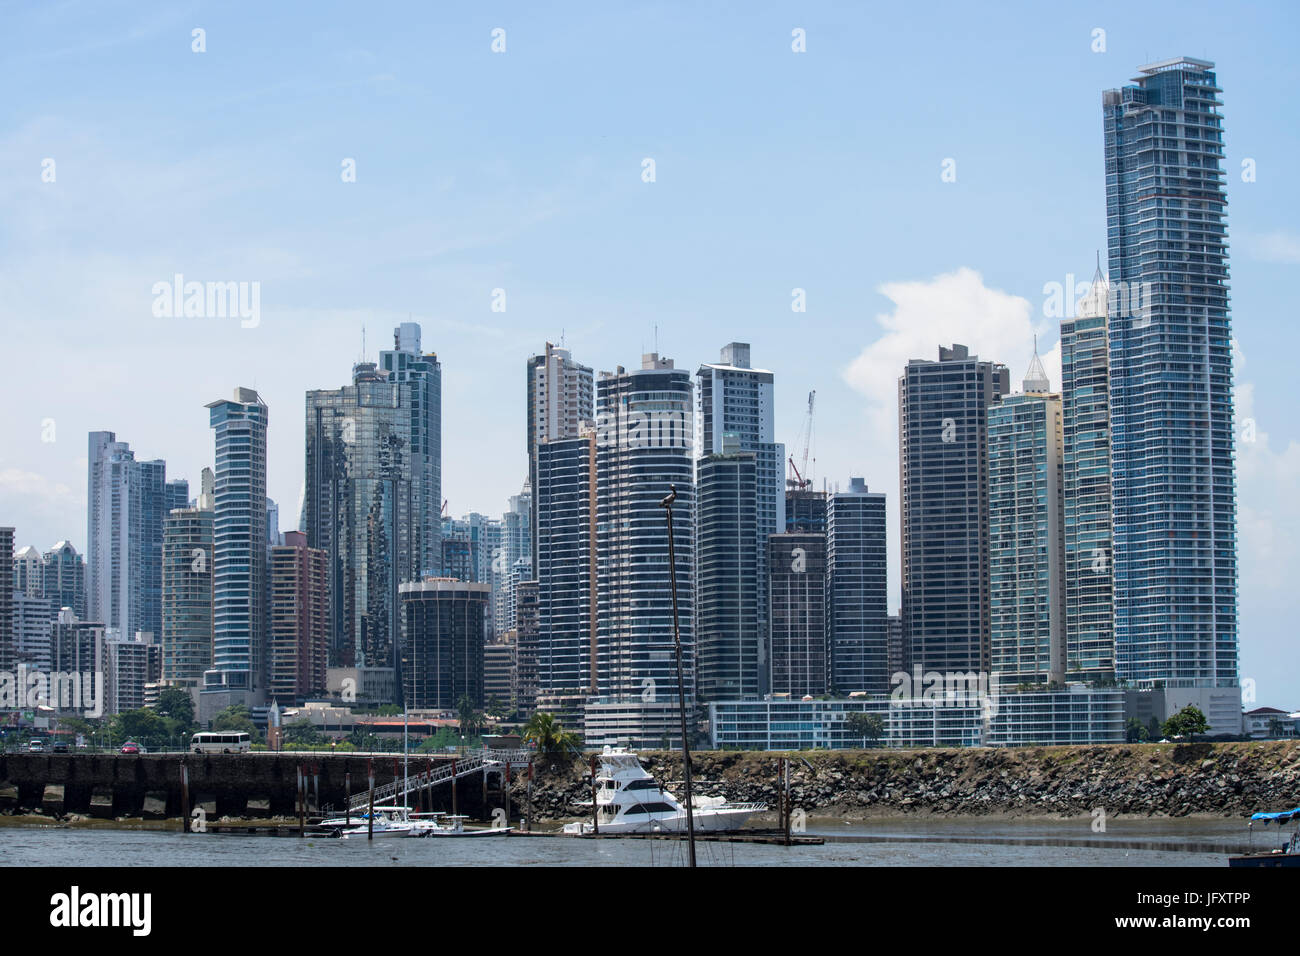 Paitilla apartment towers in Panama City Stock Photo